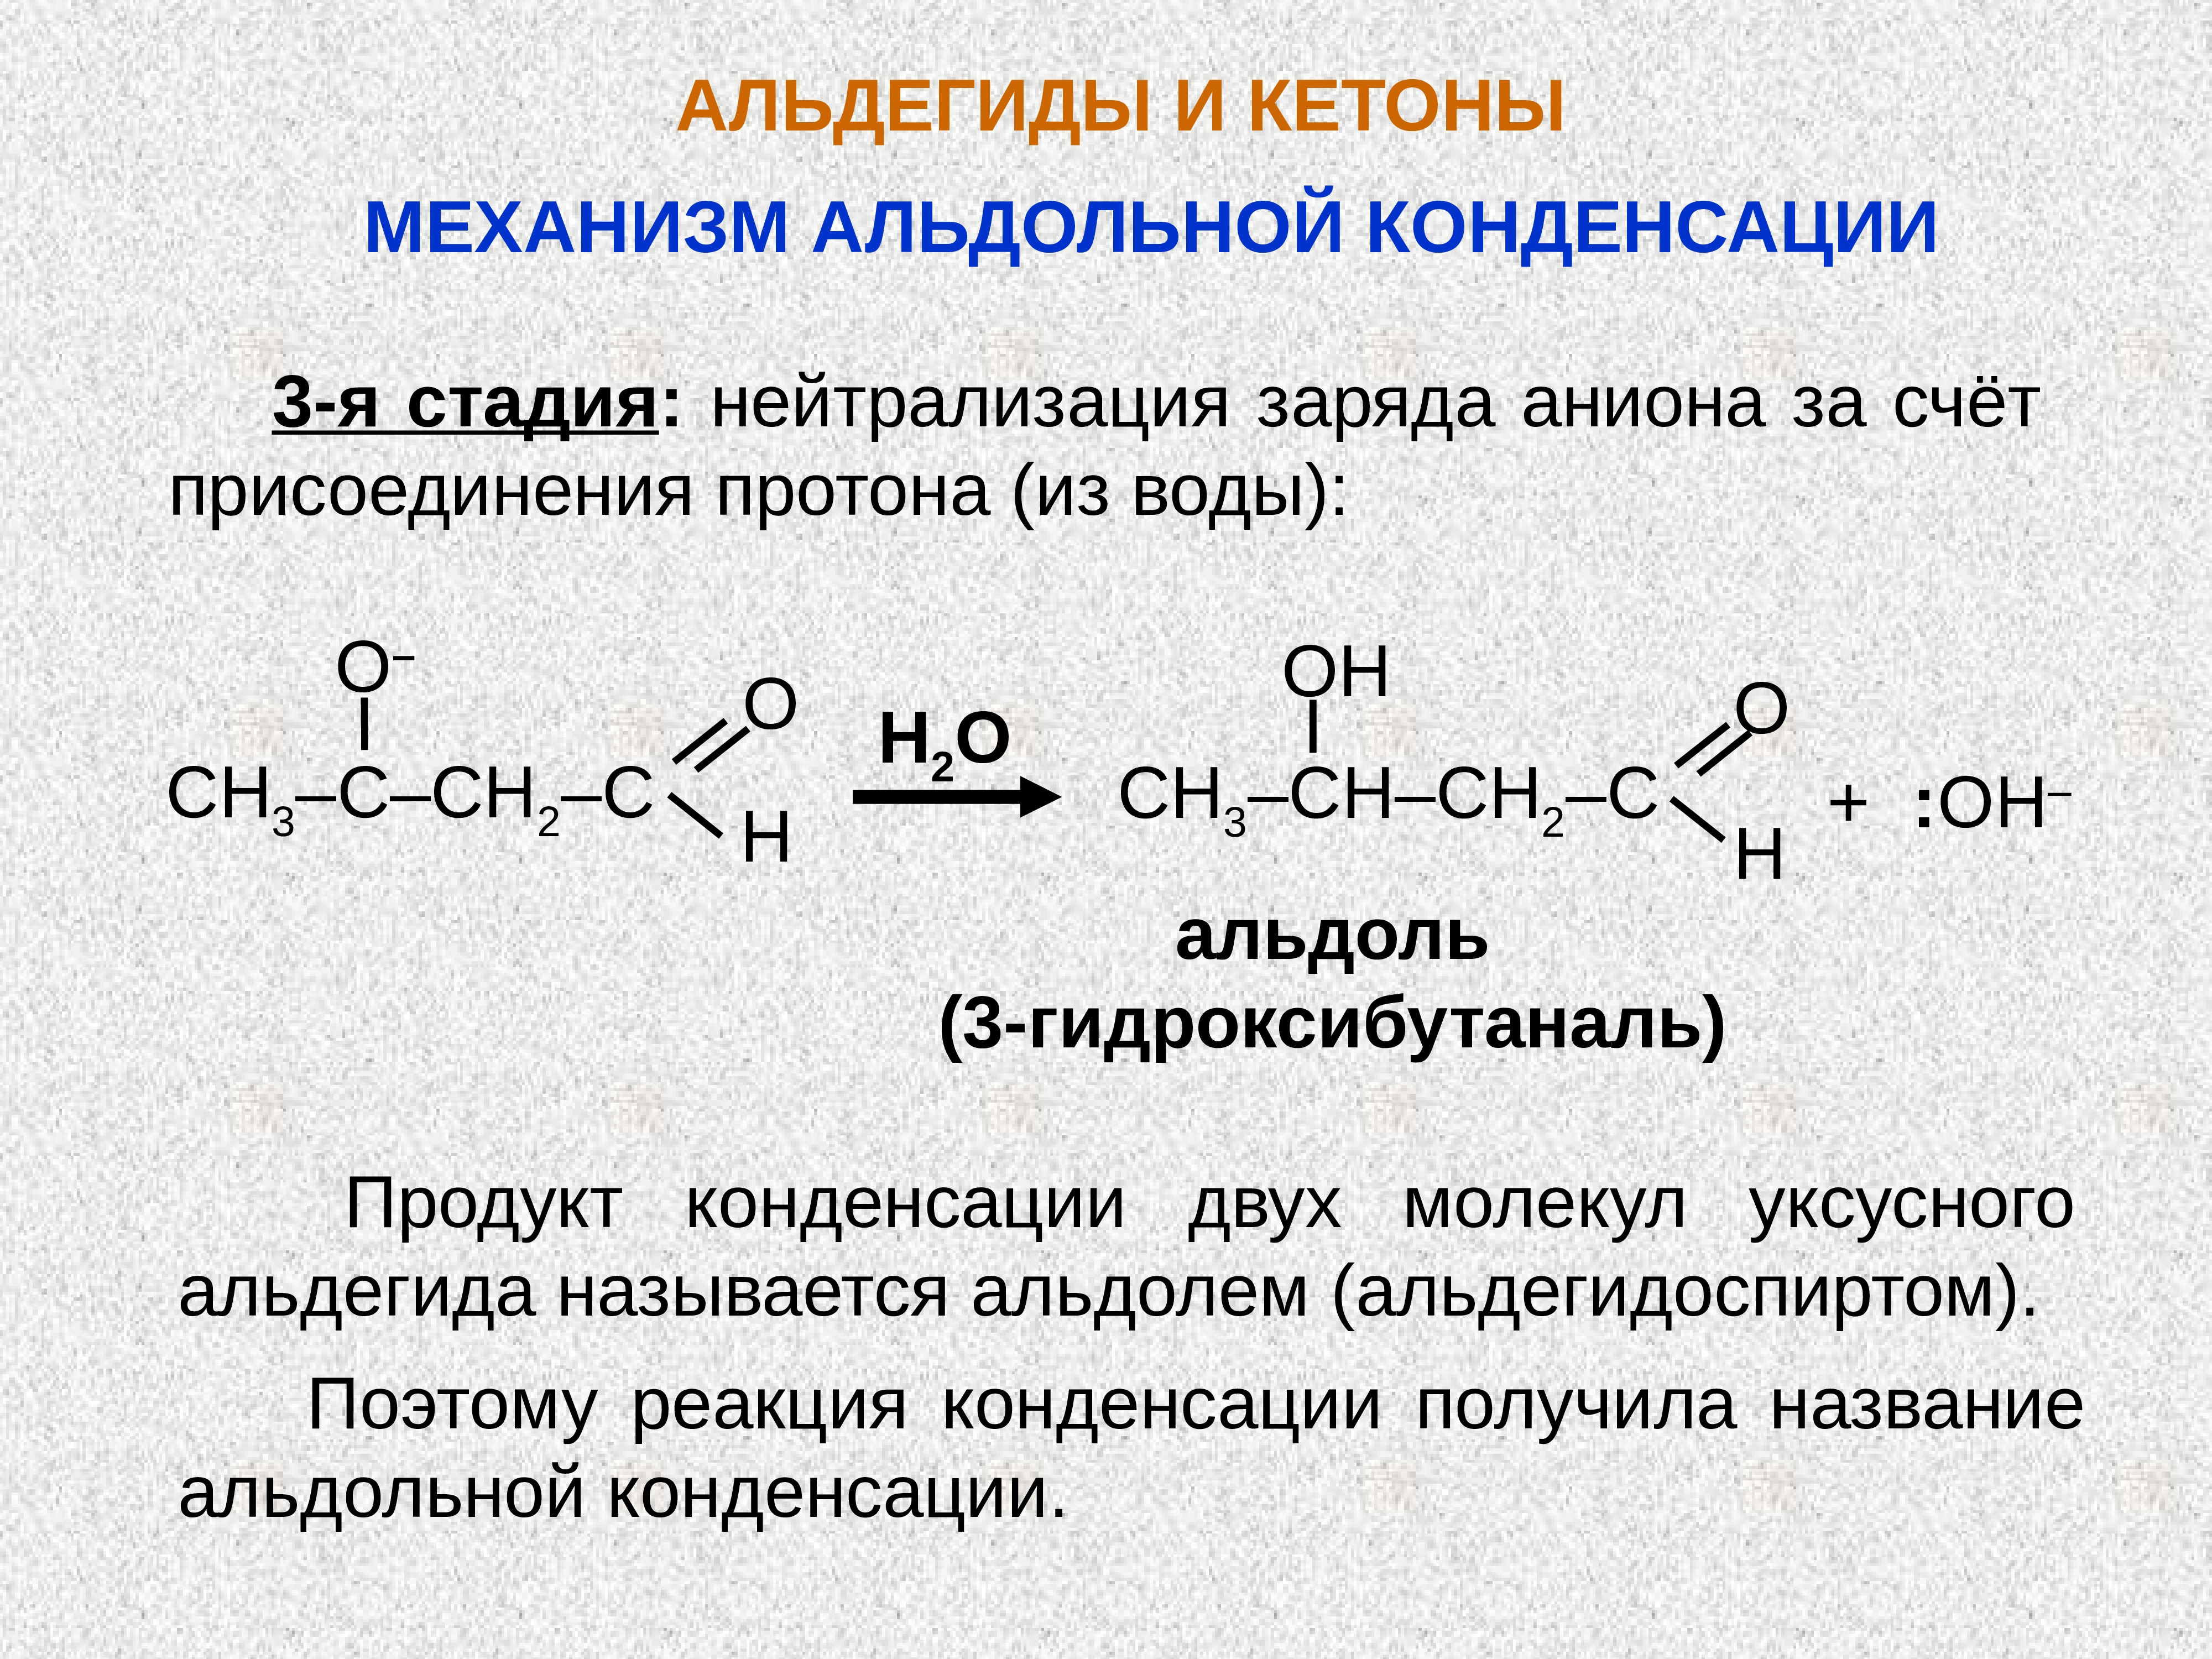 Гидролиз ацетальдегида. Альдегид плюс альдегид. Ch3 -c в альдегид. Кетоны и альдегиды c8h10o.